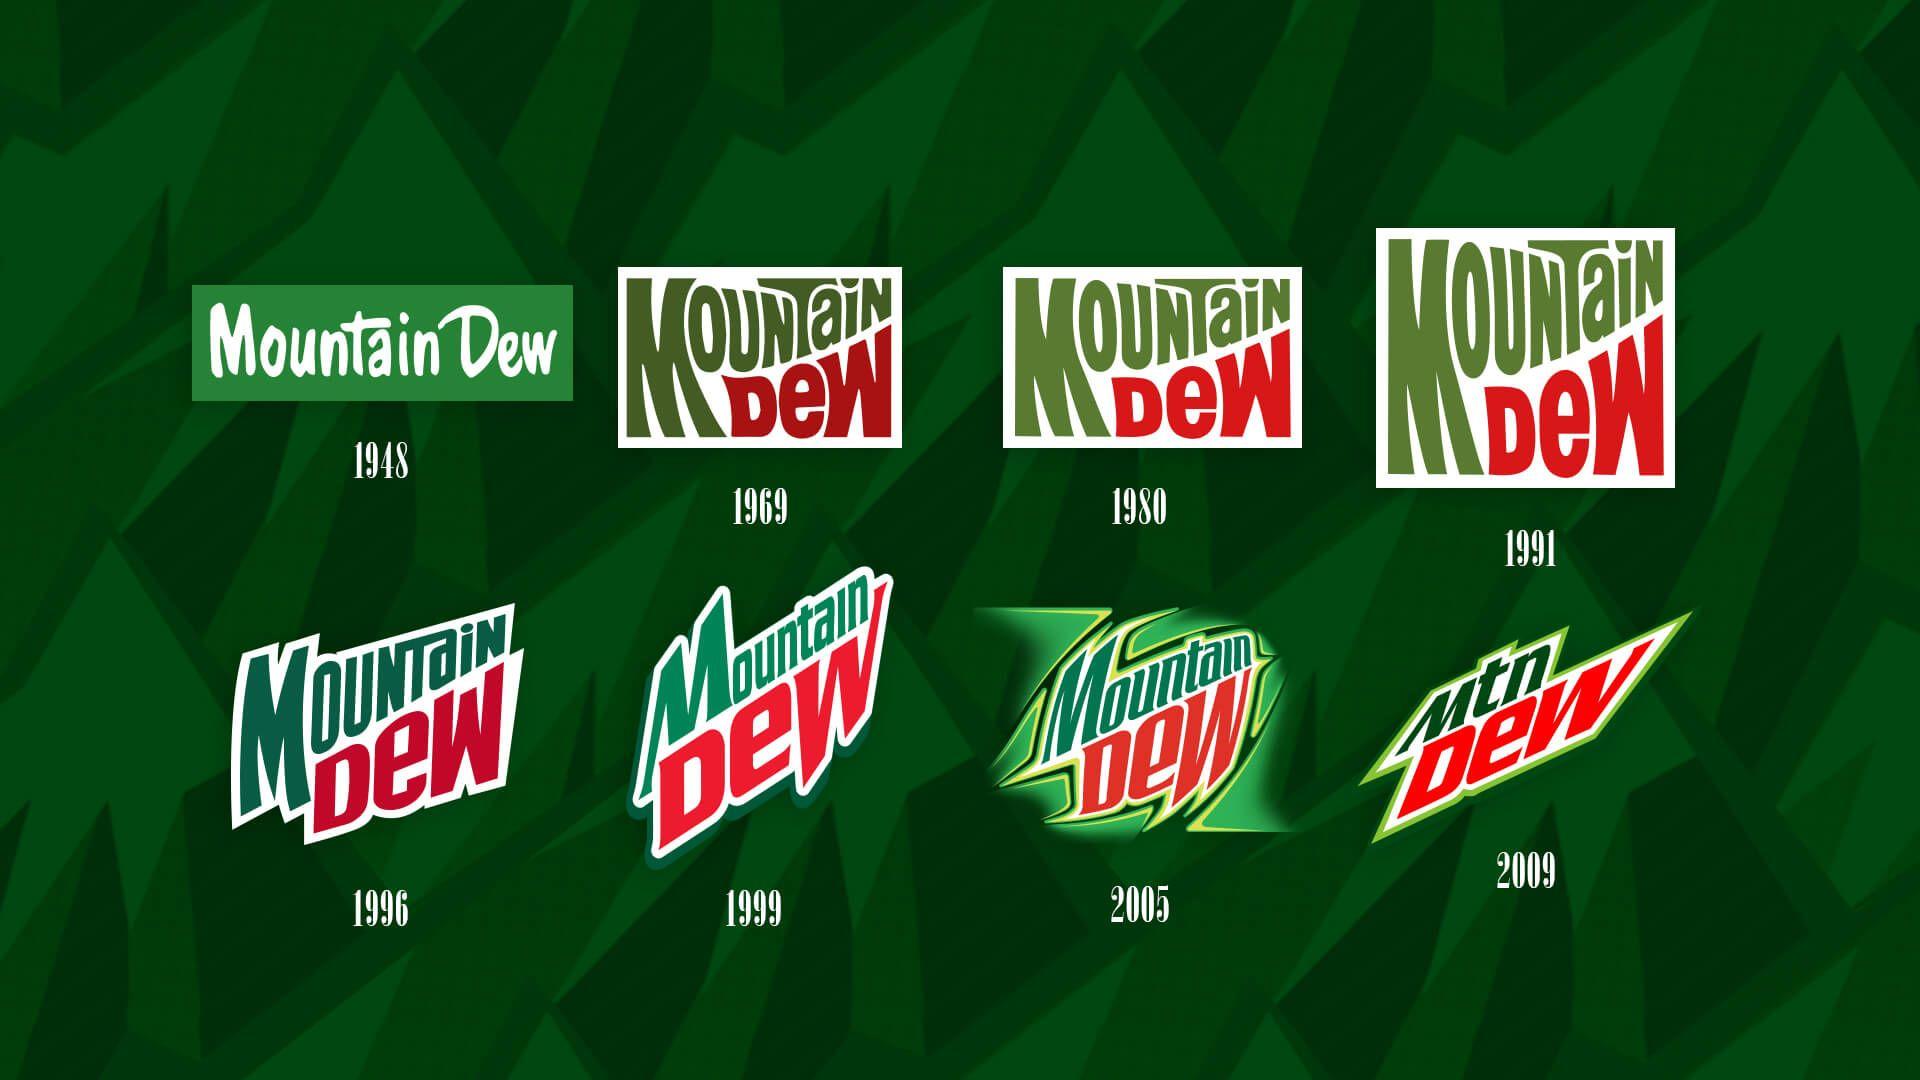 First Mountain Dew Logo - Design Archives. Branding, Web Design, & Marketing Services